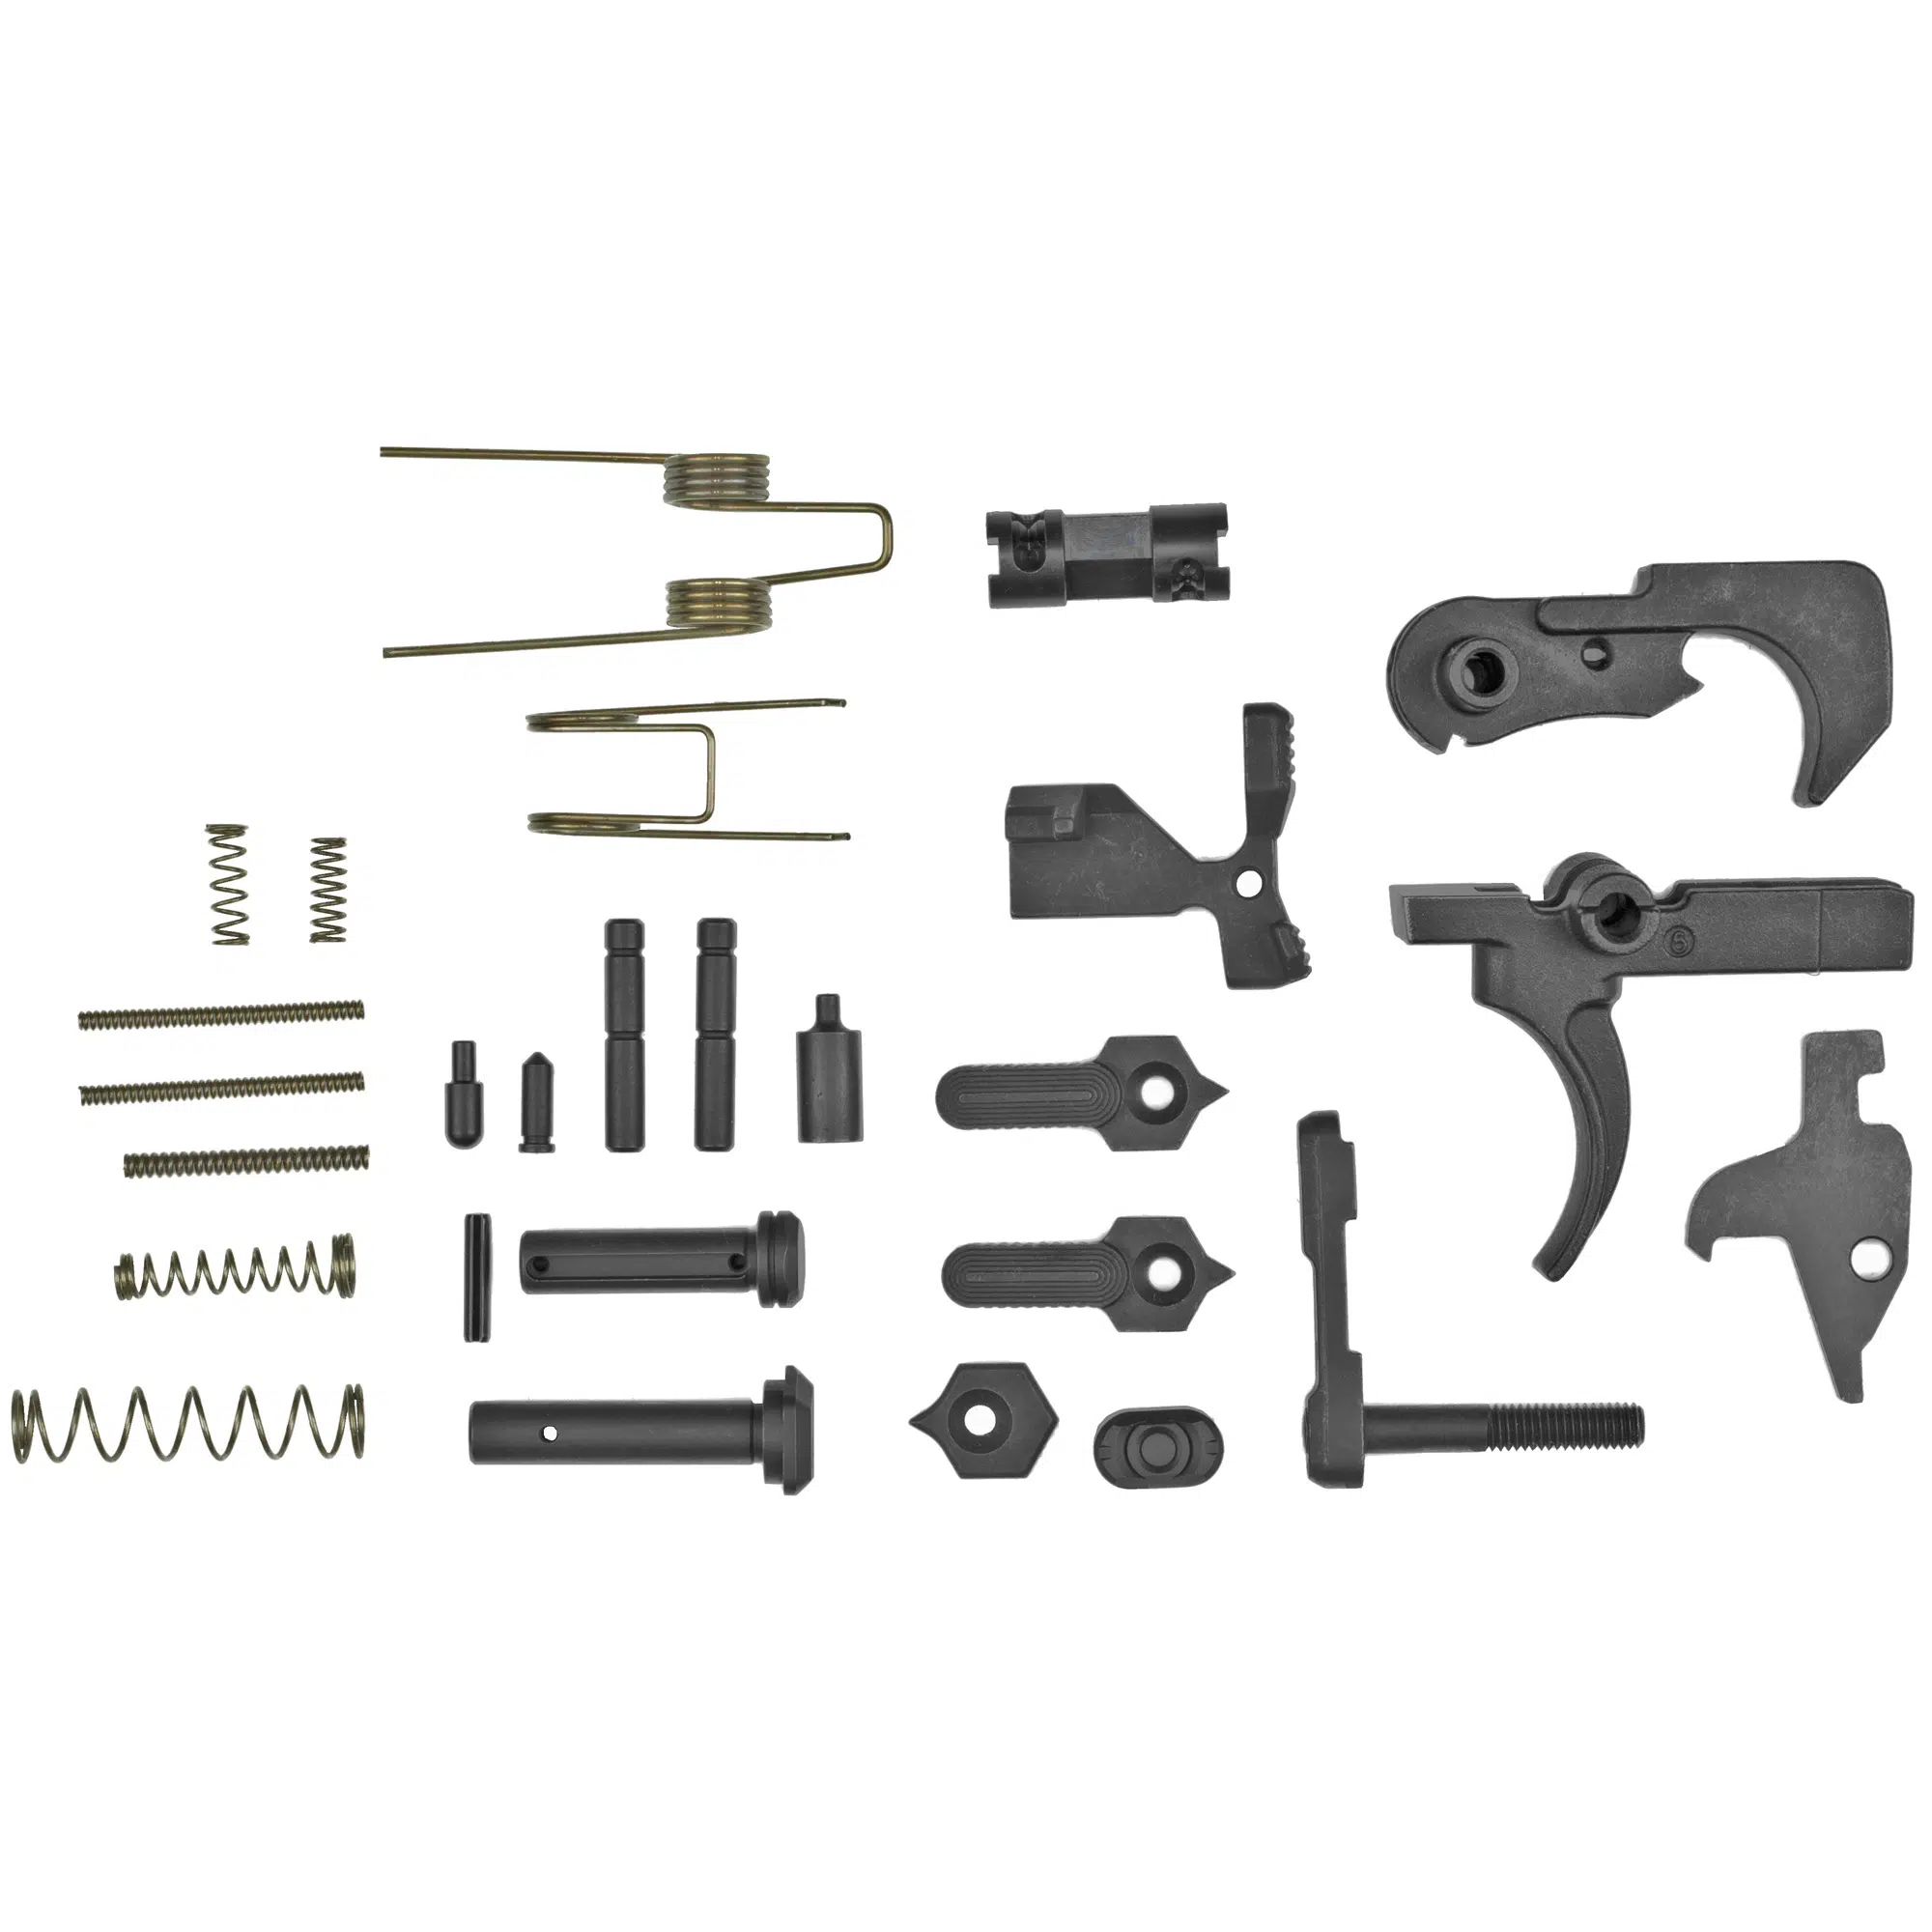 Strike Industries Enhanced AR15 Lower Parts Kit